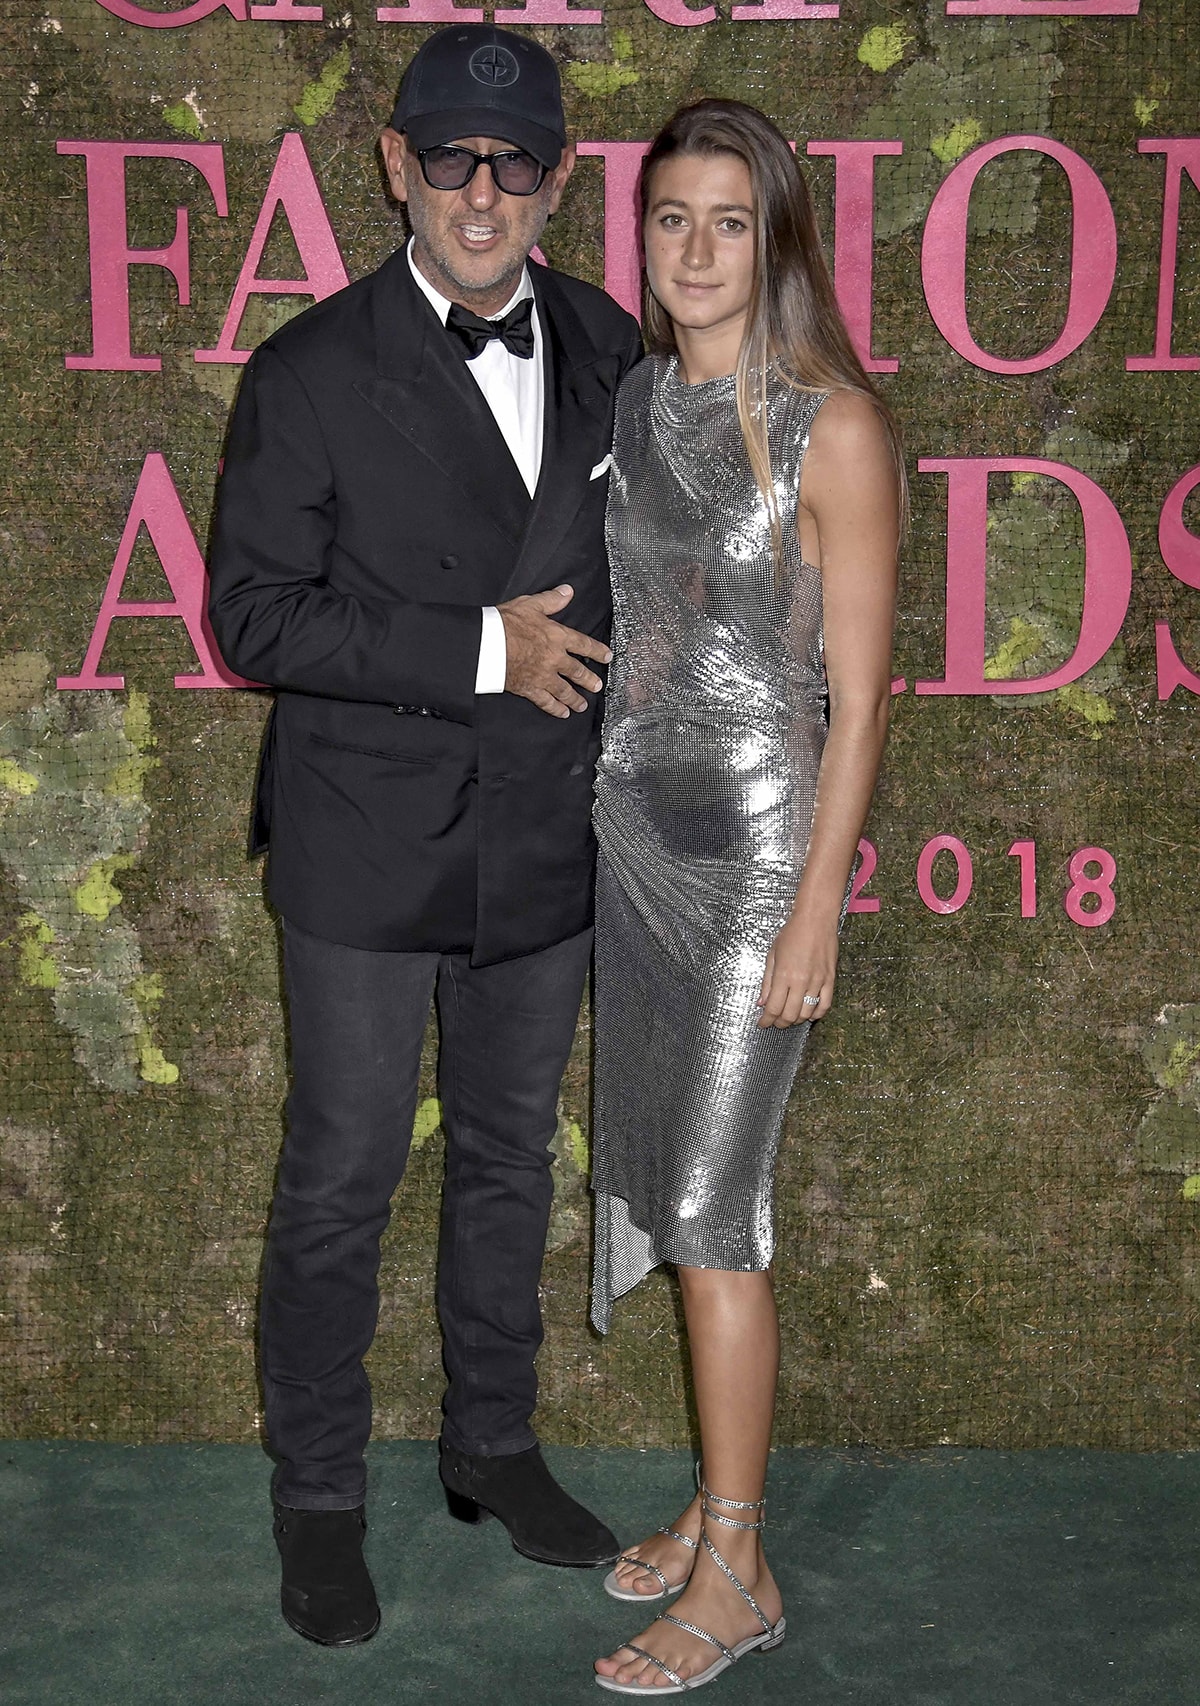 Andrea Panconesi with his daughter Annagreta Panconesi at the Green Carpet Fashion Awards Italia 2018